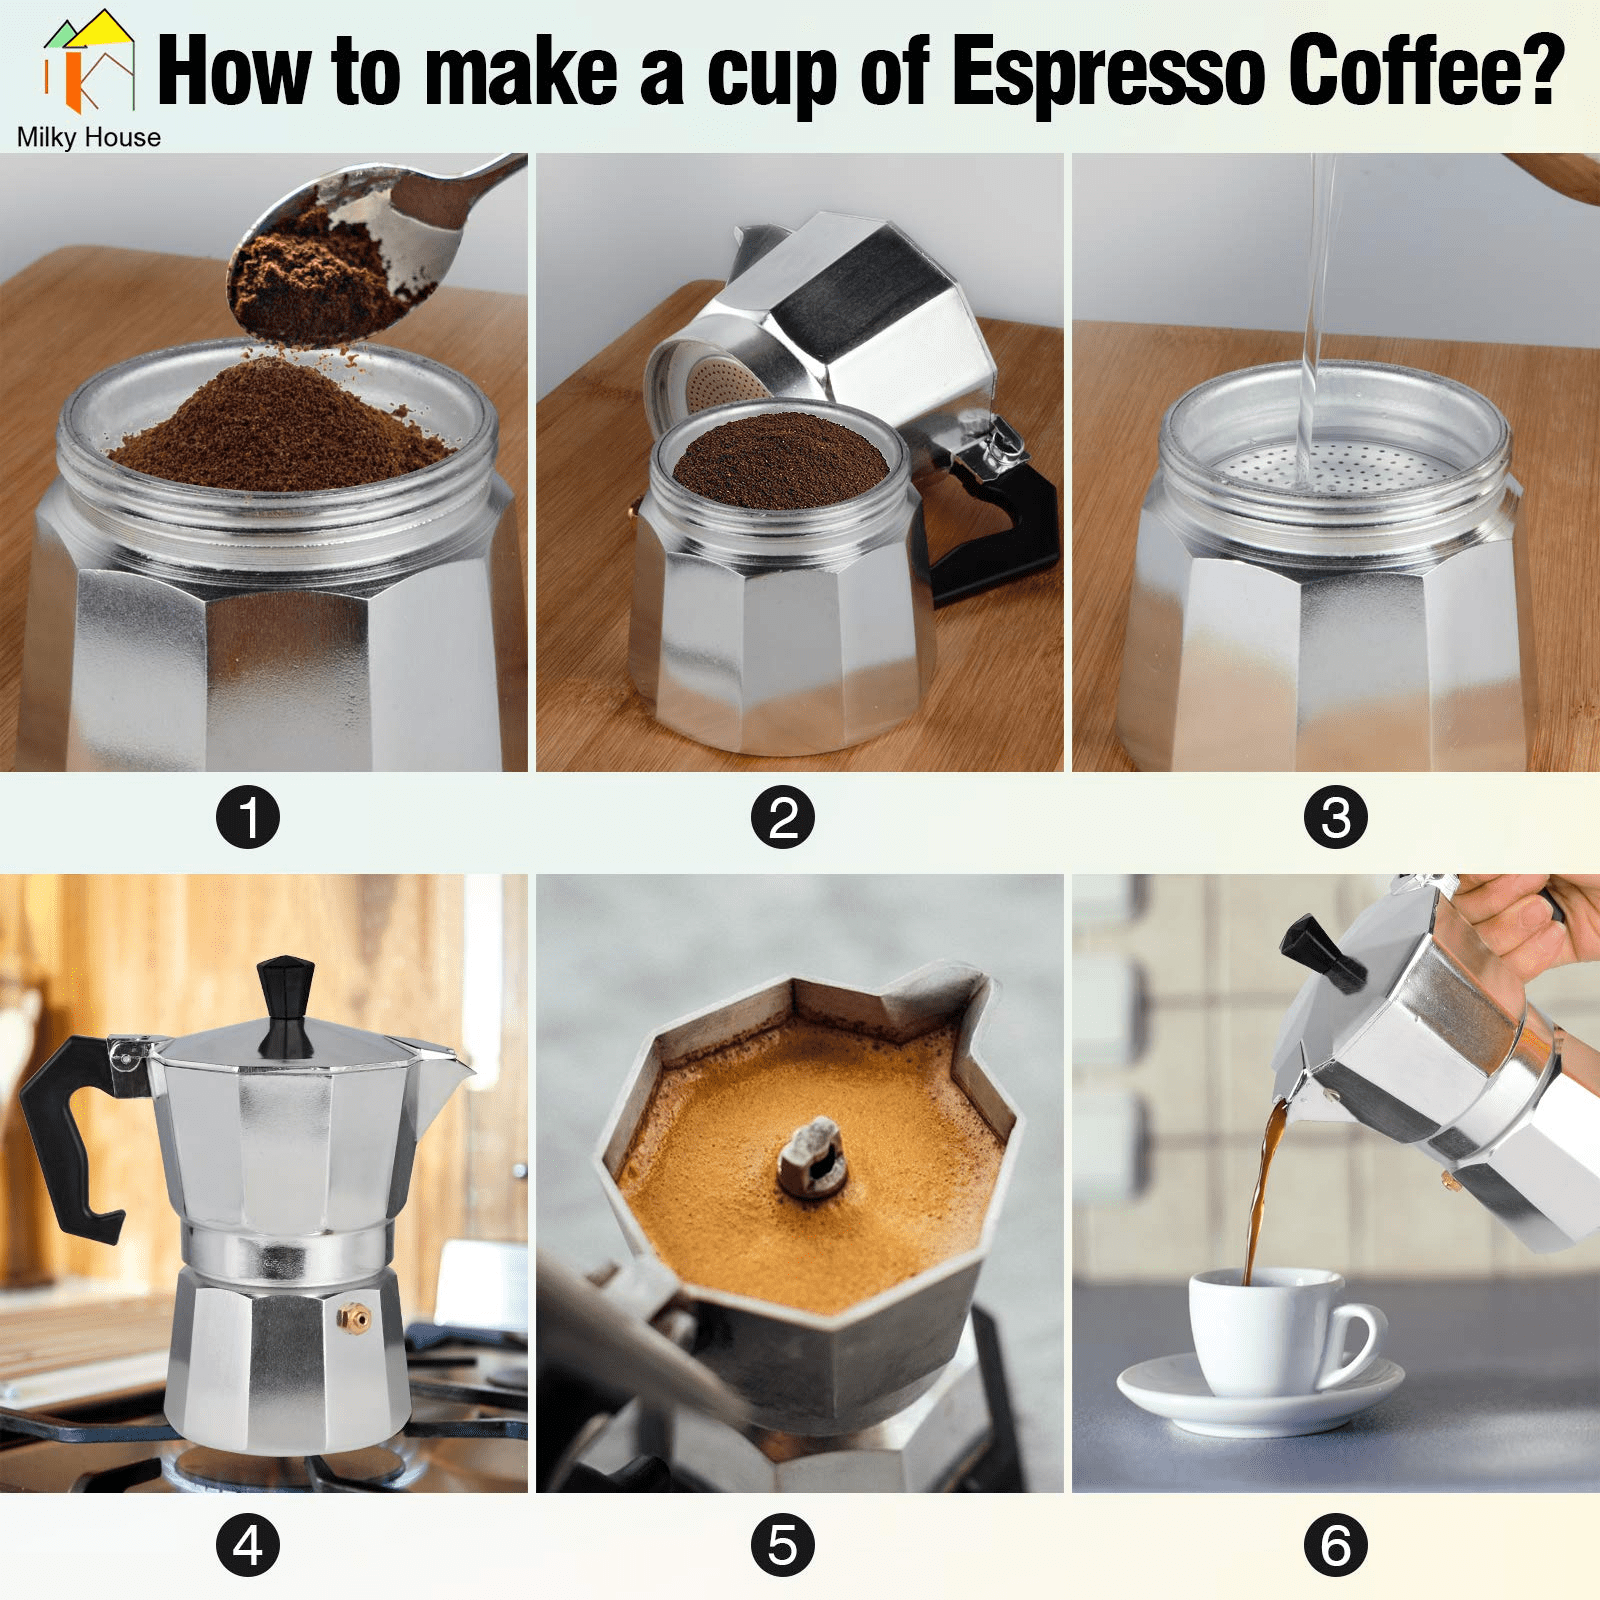 10 Steps To Making Espresso In A Moka, The Italian Coffee Pot